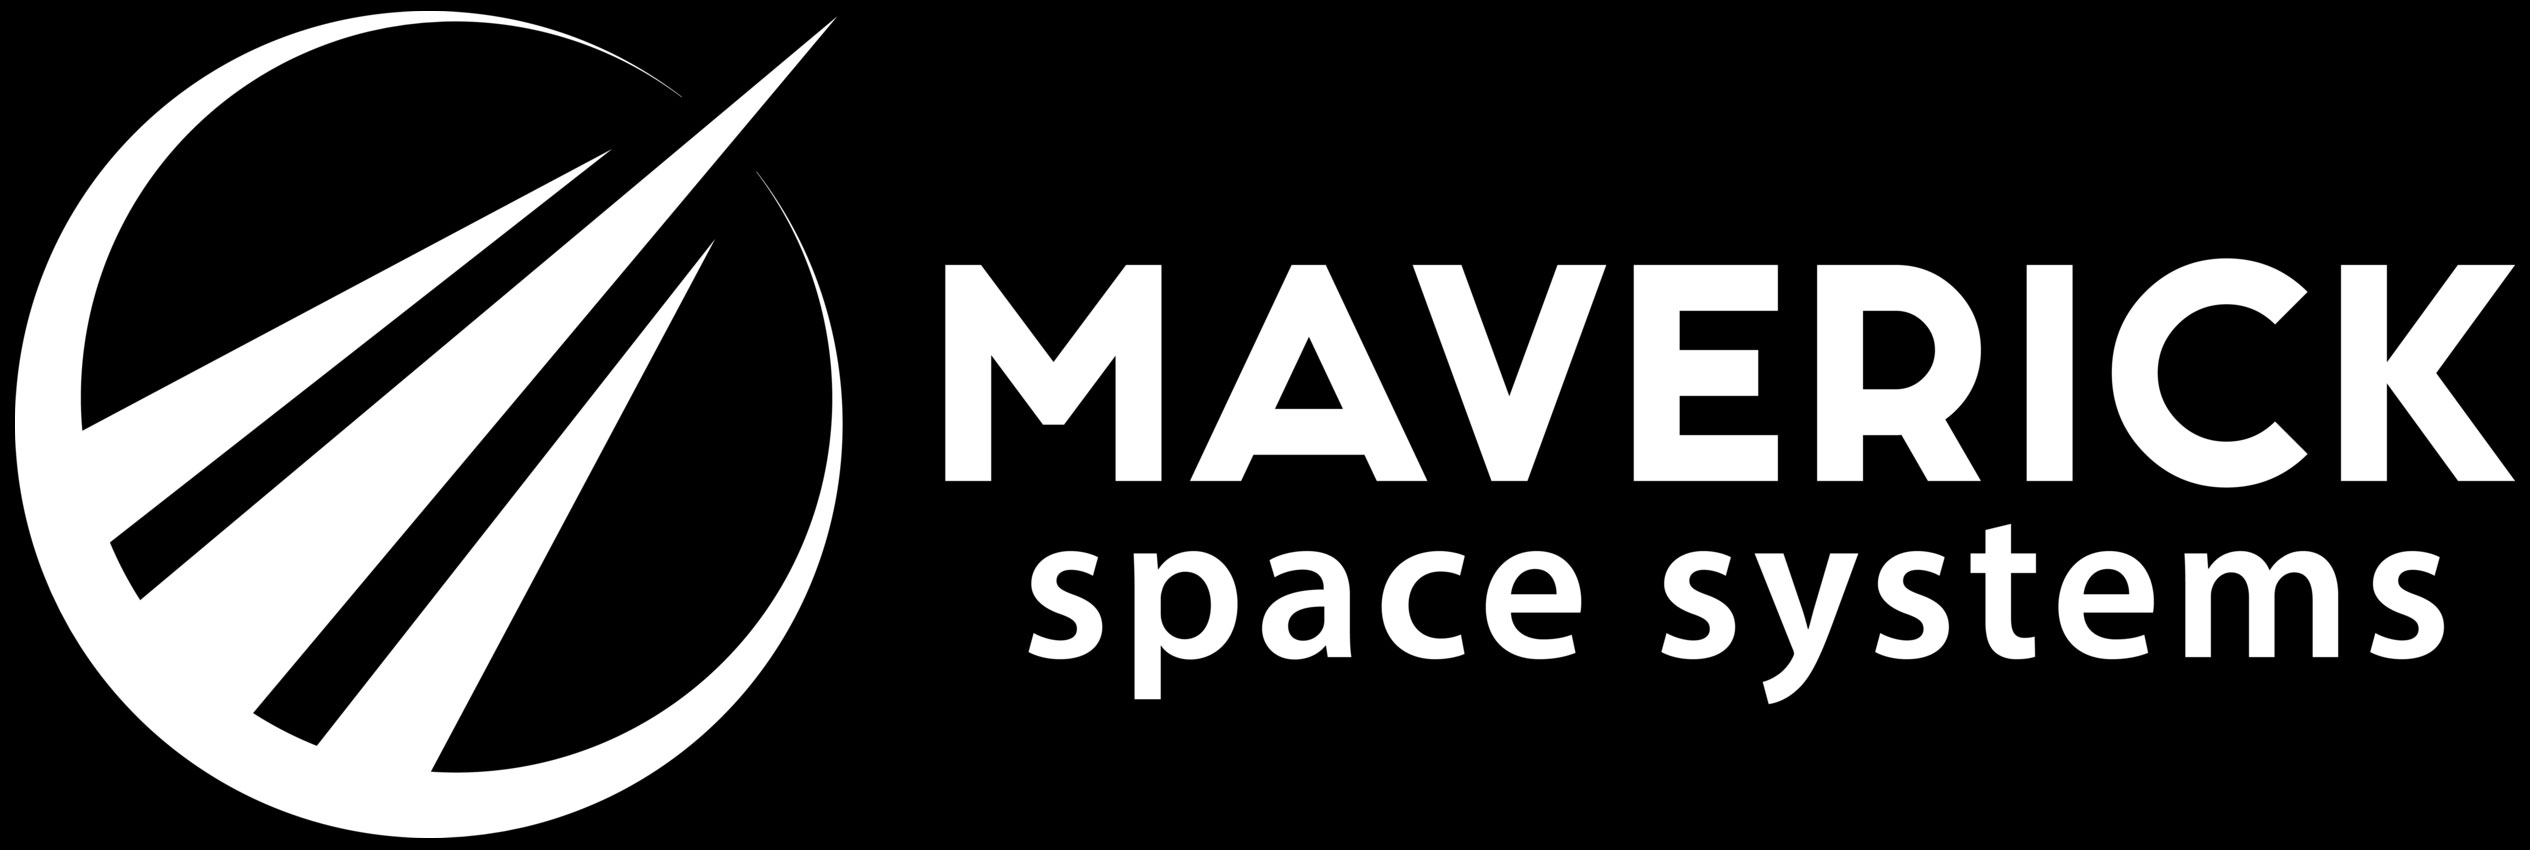 Maverick Space Systems logo